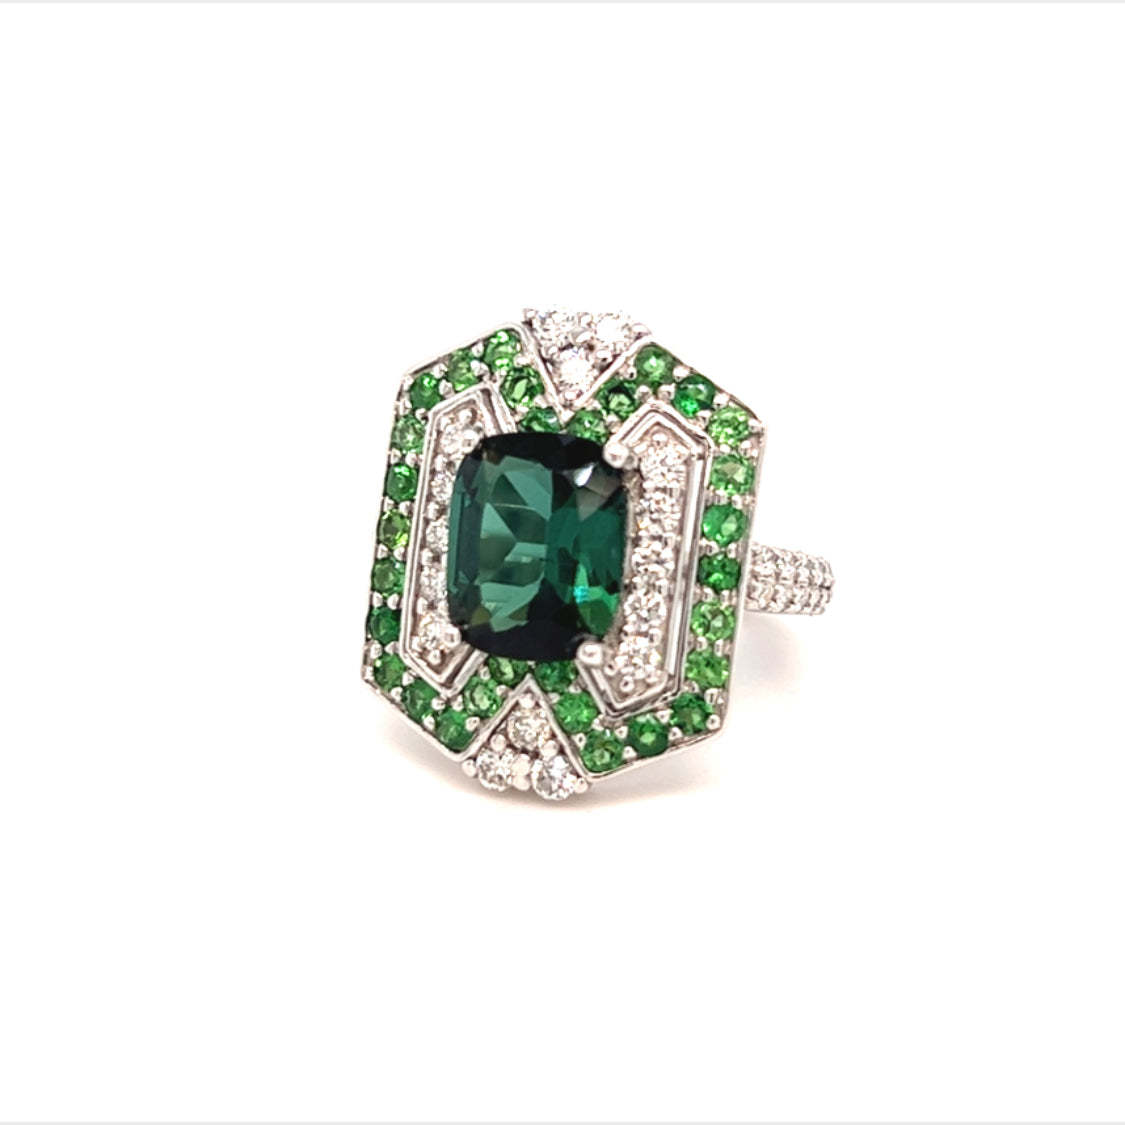 Tourmaline Tsavorite Diamond Ring Size 6.25 14k Gold 5.55 TCW GIA Certified $7,550 215422 - Certified Fine Jewelry